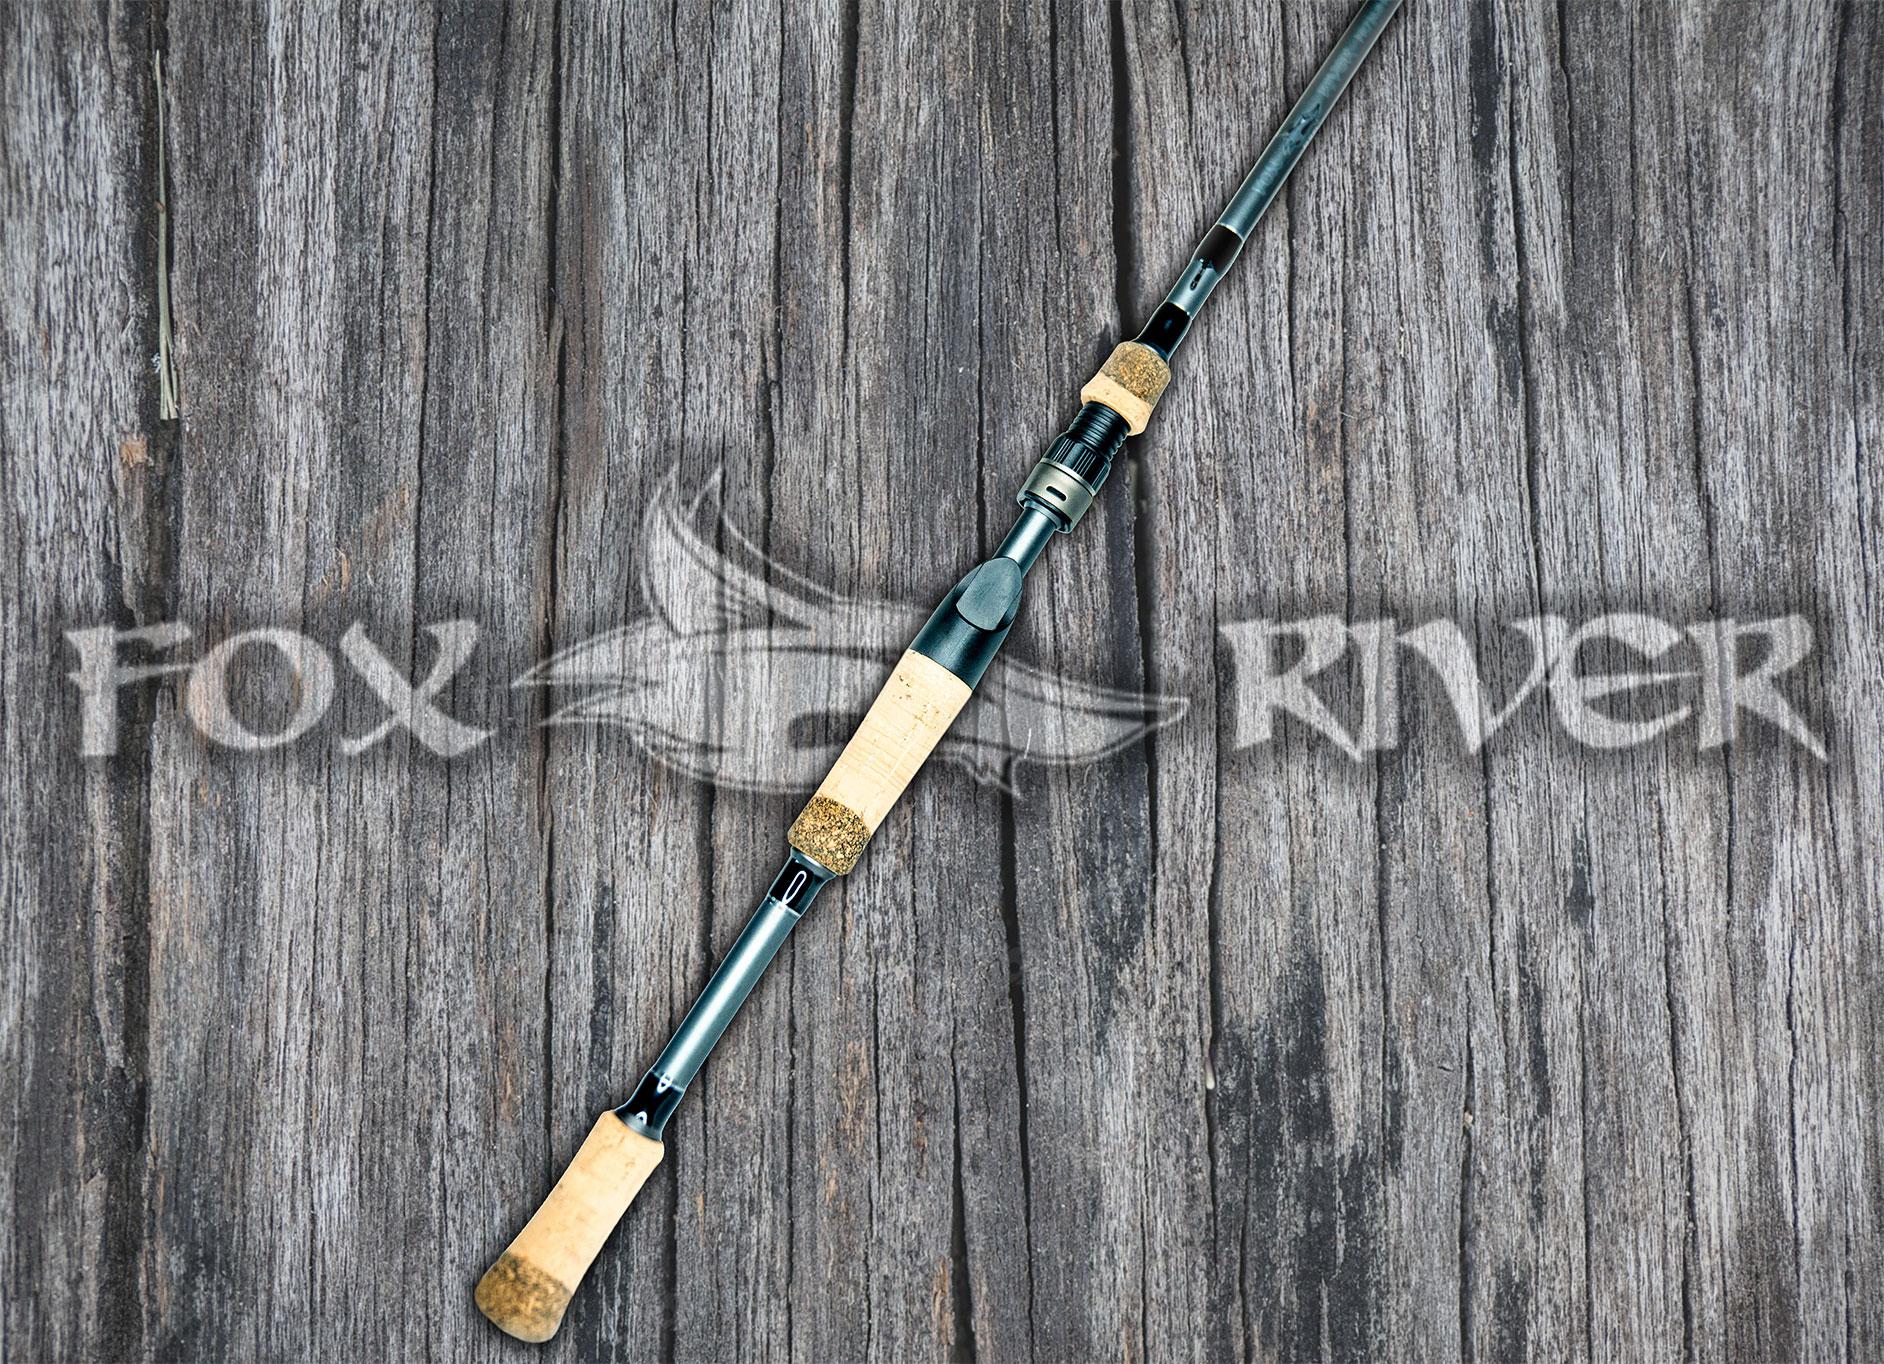 Fox River Lures and Rods - 7' 3 Medium Heavy Split-Grip Casting Rod